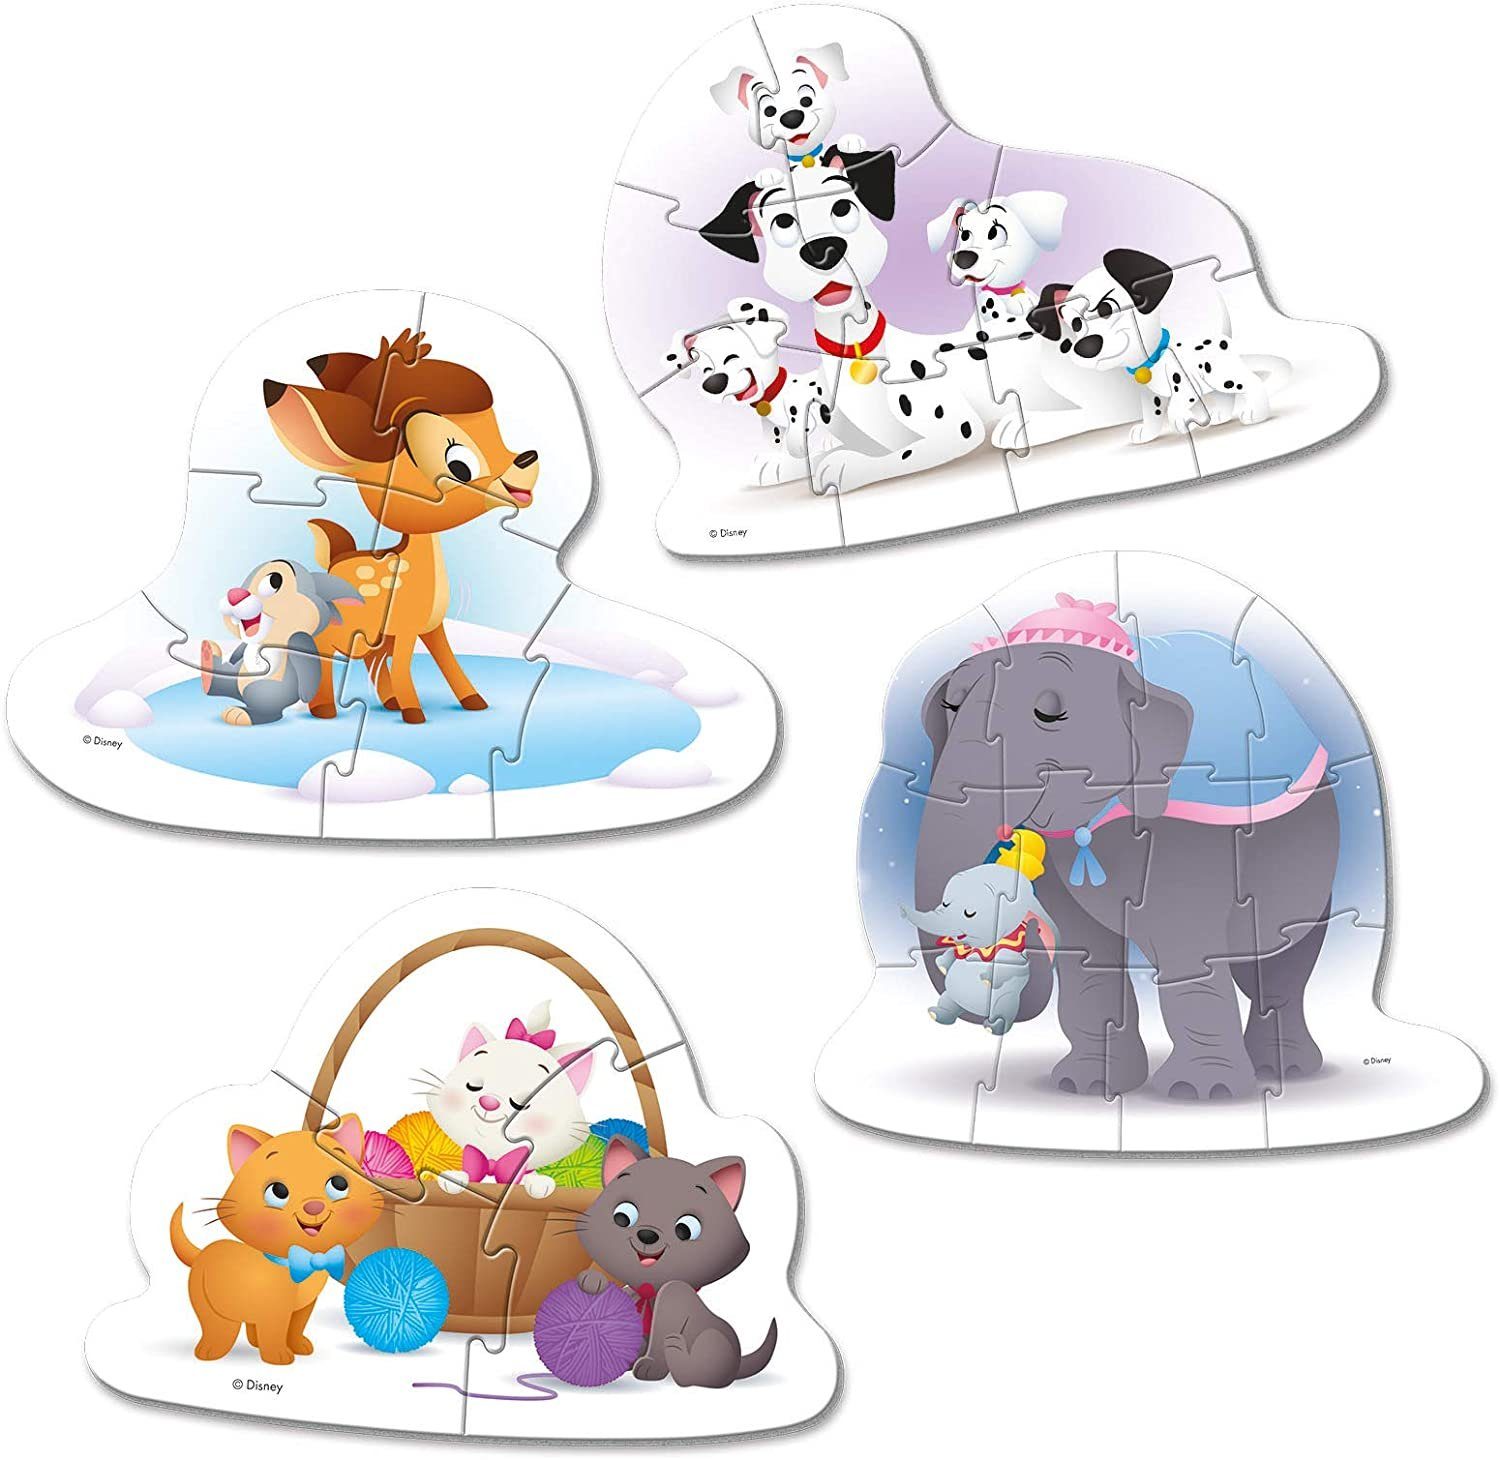 Clementoni® Puzzle Play Friends Future 4 Puzzleteile Animal Mini-Puzzle for 6, 12 Teile, Disney 9, 3